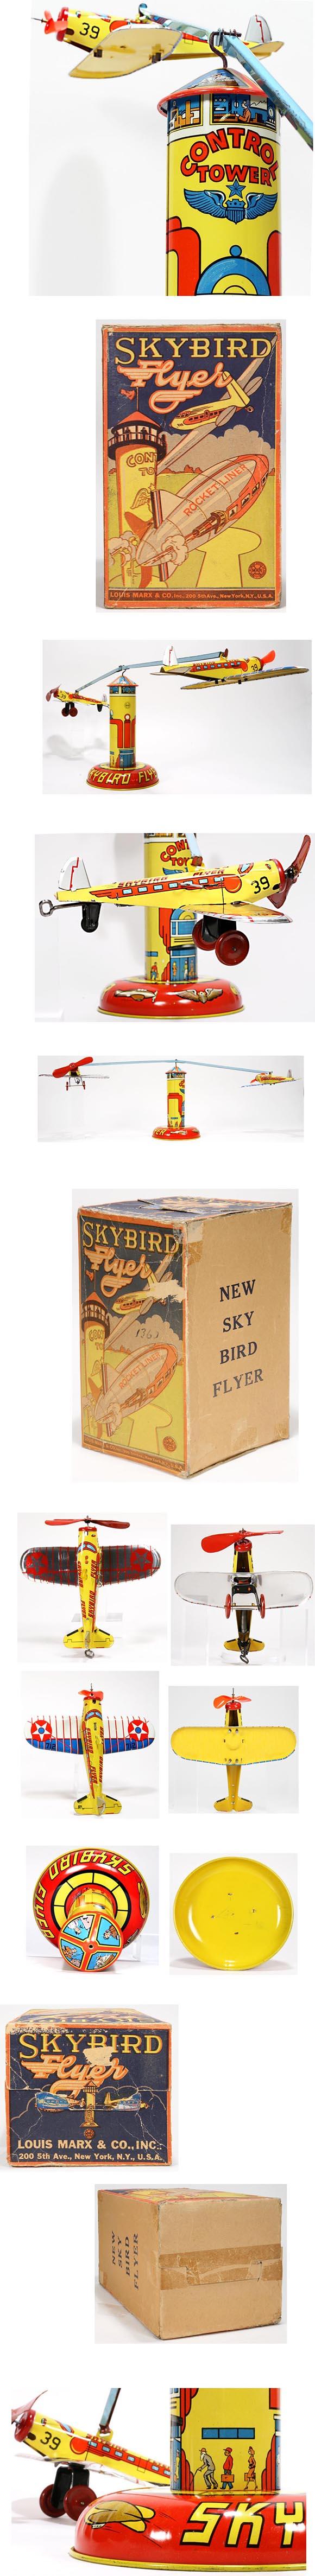 1947 Marx, New Sky Bird Flyer in Original Box